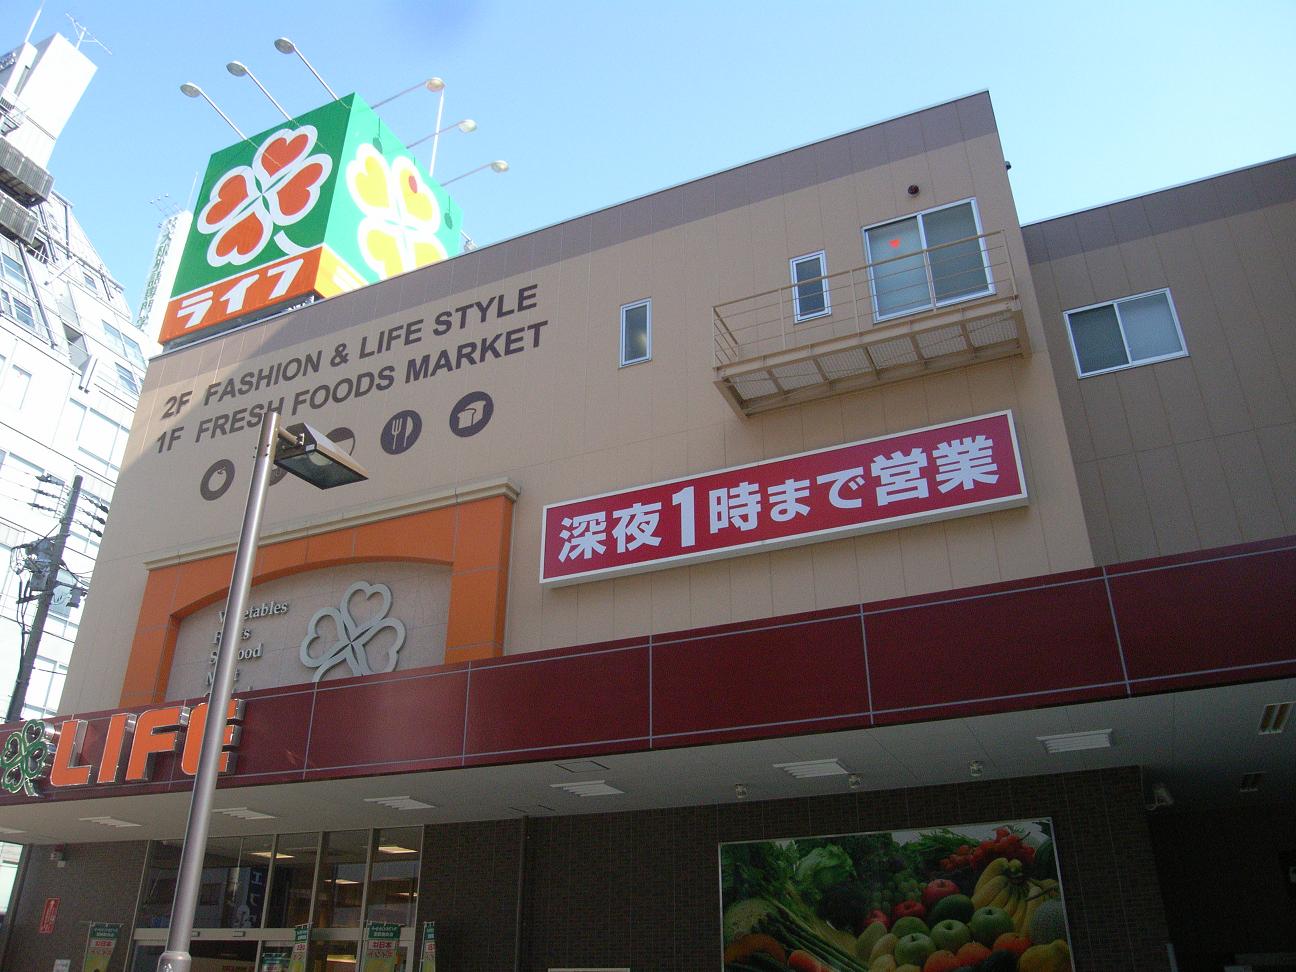 Supermarket. 245m up to life Tenjinbashi store (Super)